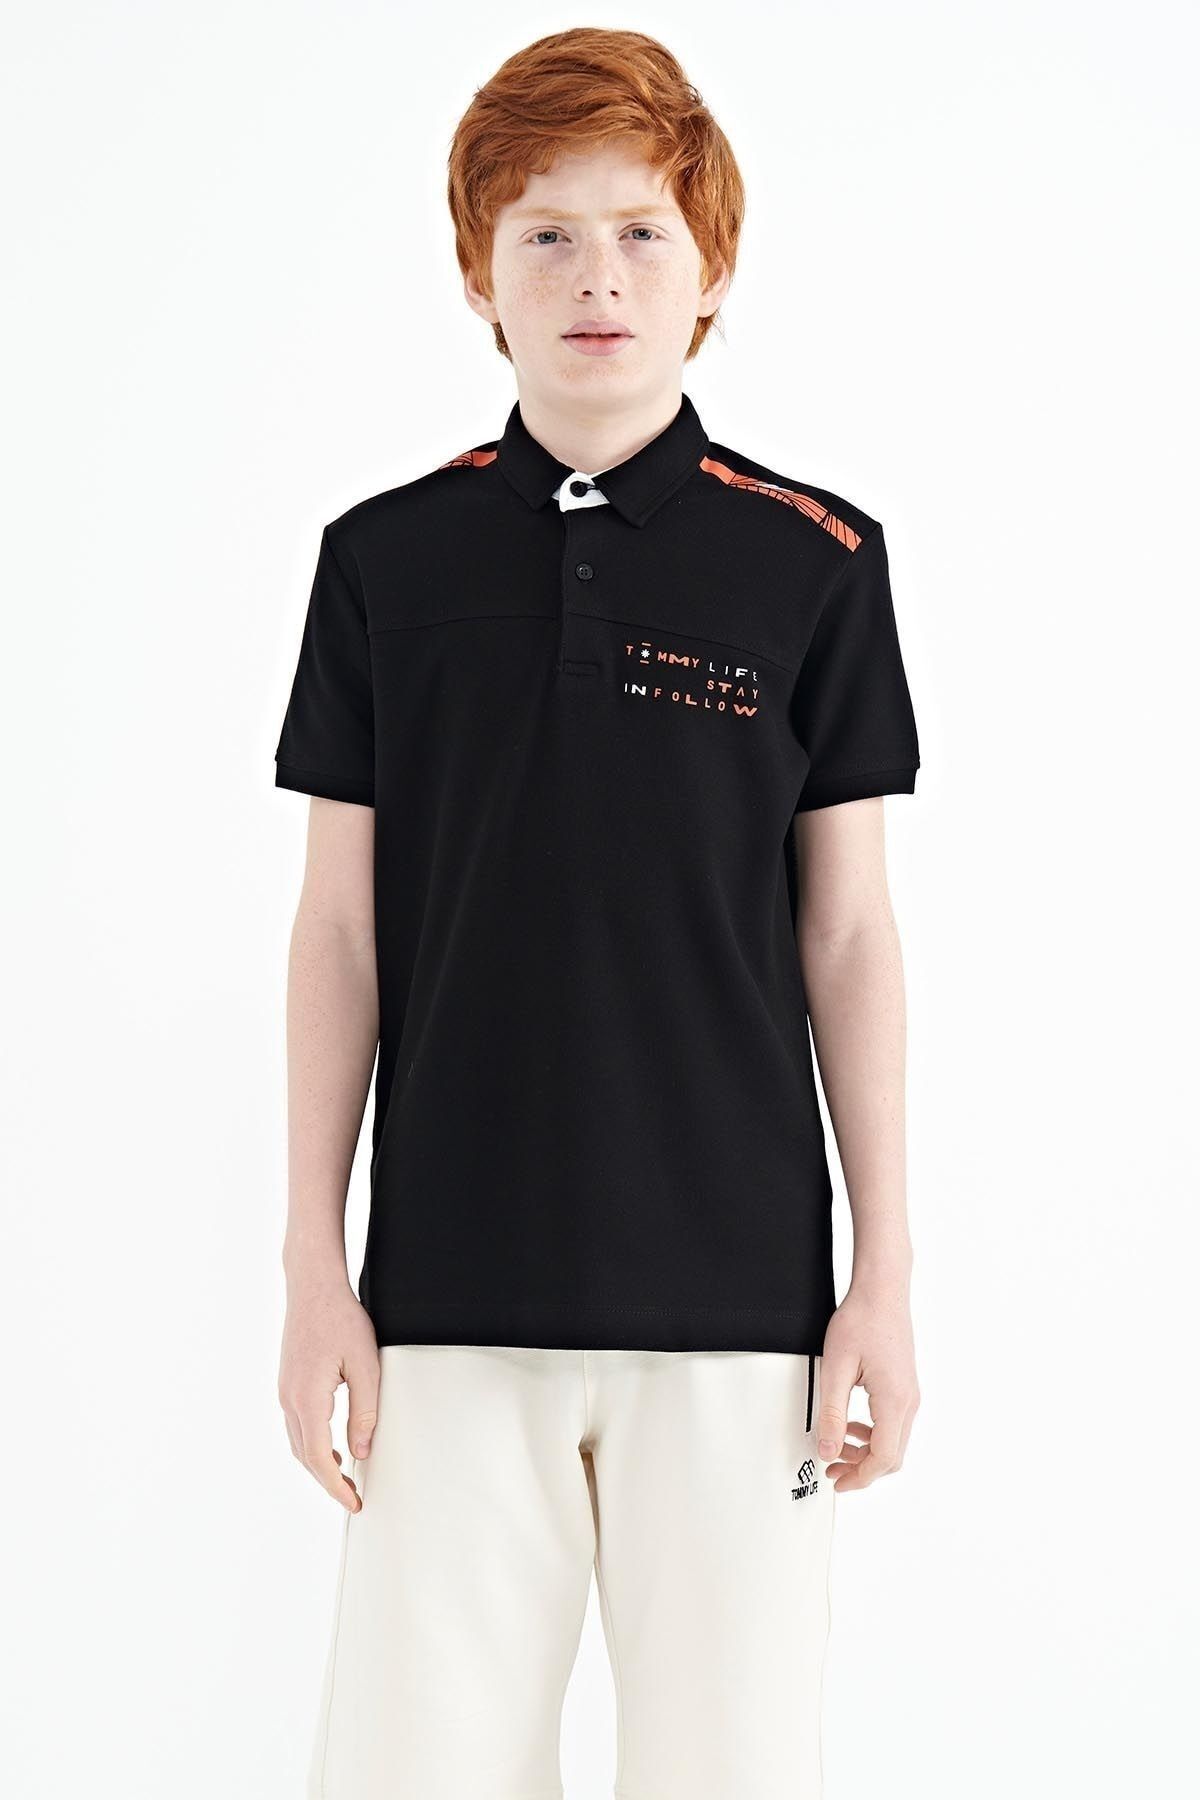 TOMMY LIFE Siyah Baskı Detaylı Standart Kalıp Polo Yaka Erkek Çocuk T-shirt - 11140